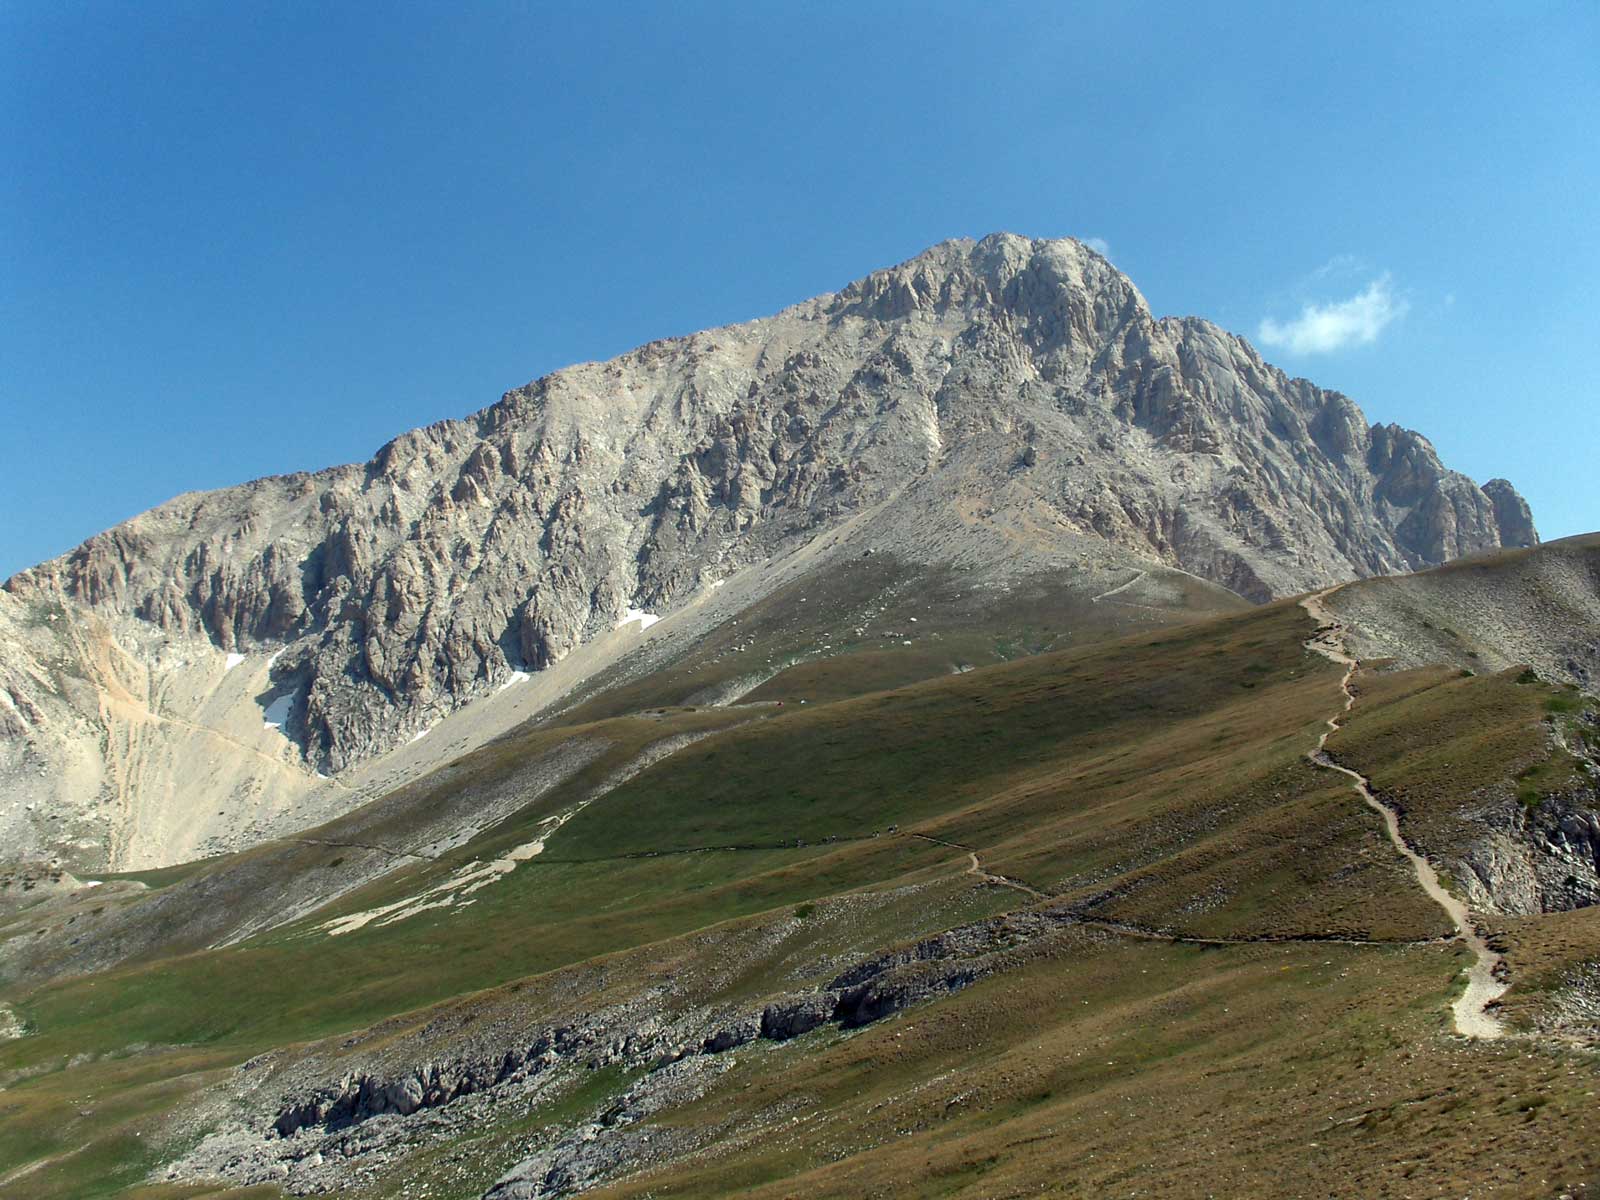 File:Corno Grande with paths.jpg - Wikimedia Commons